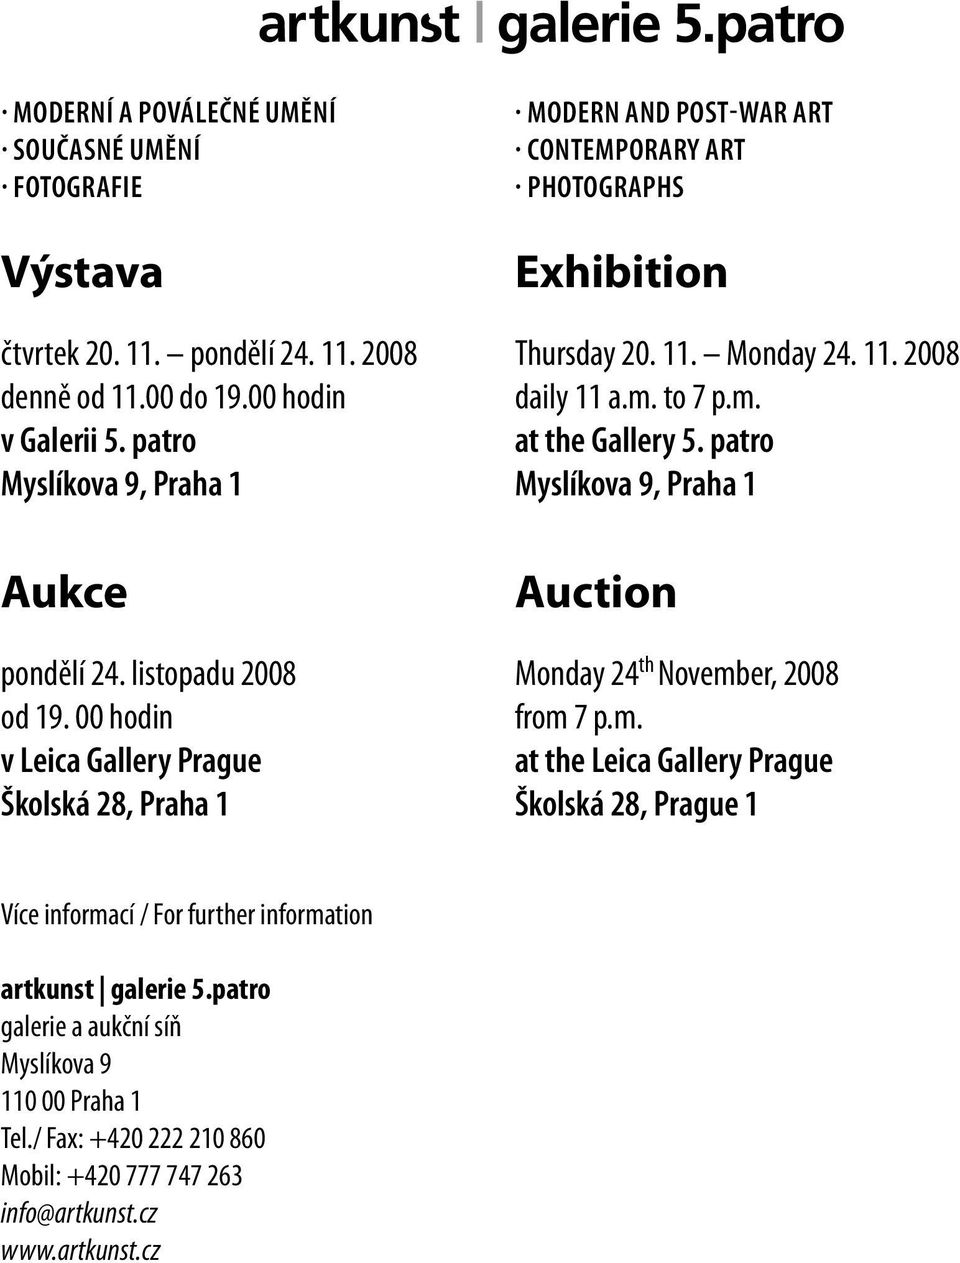 00 hodin v Leica Gallery Prague Školská 28, Praha 1 Modern and post-war art Contemporary art Photographs Exhibition Thursday 20. 11. Monday 24. 11. 2008 daily 11 a.m. to 7 p.m. at the Gallery 5.